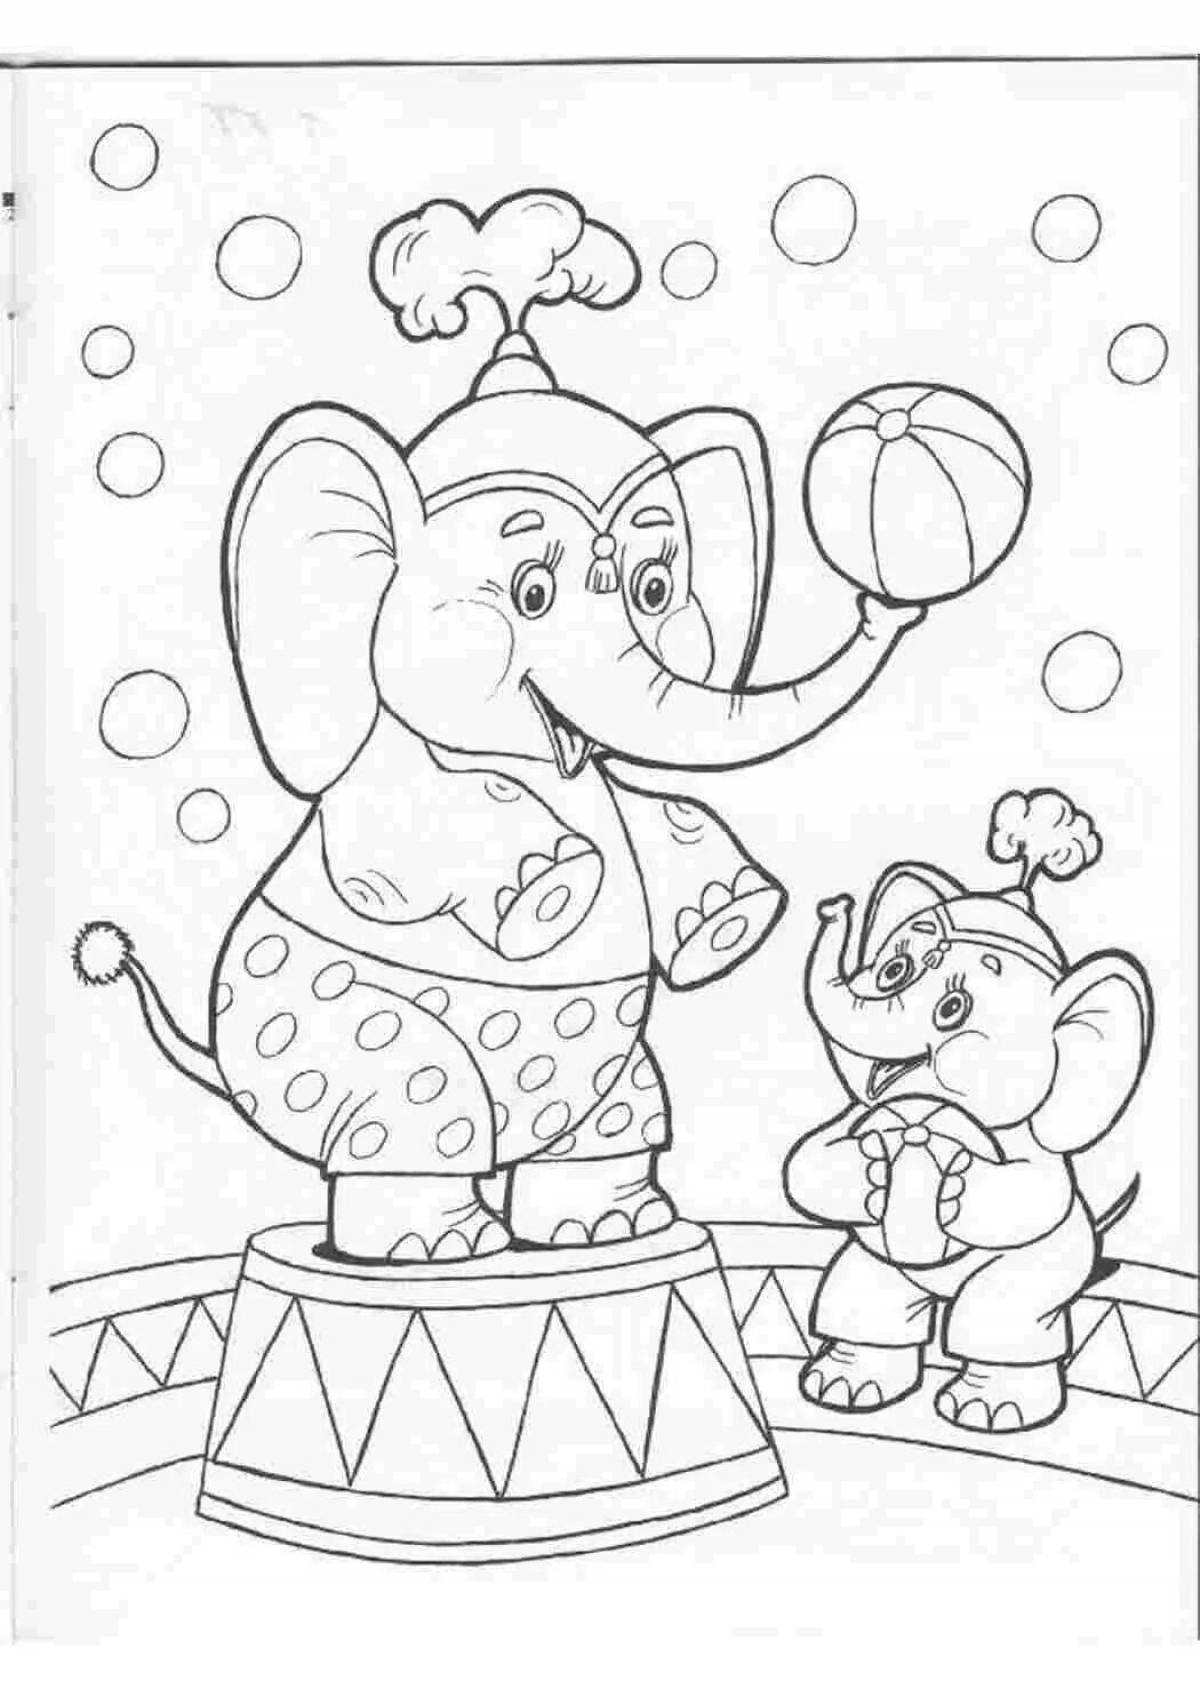 Wonderful circus coloring for kids